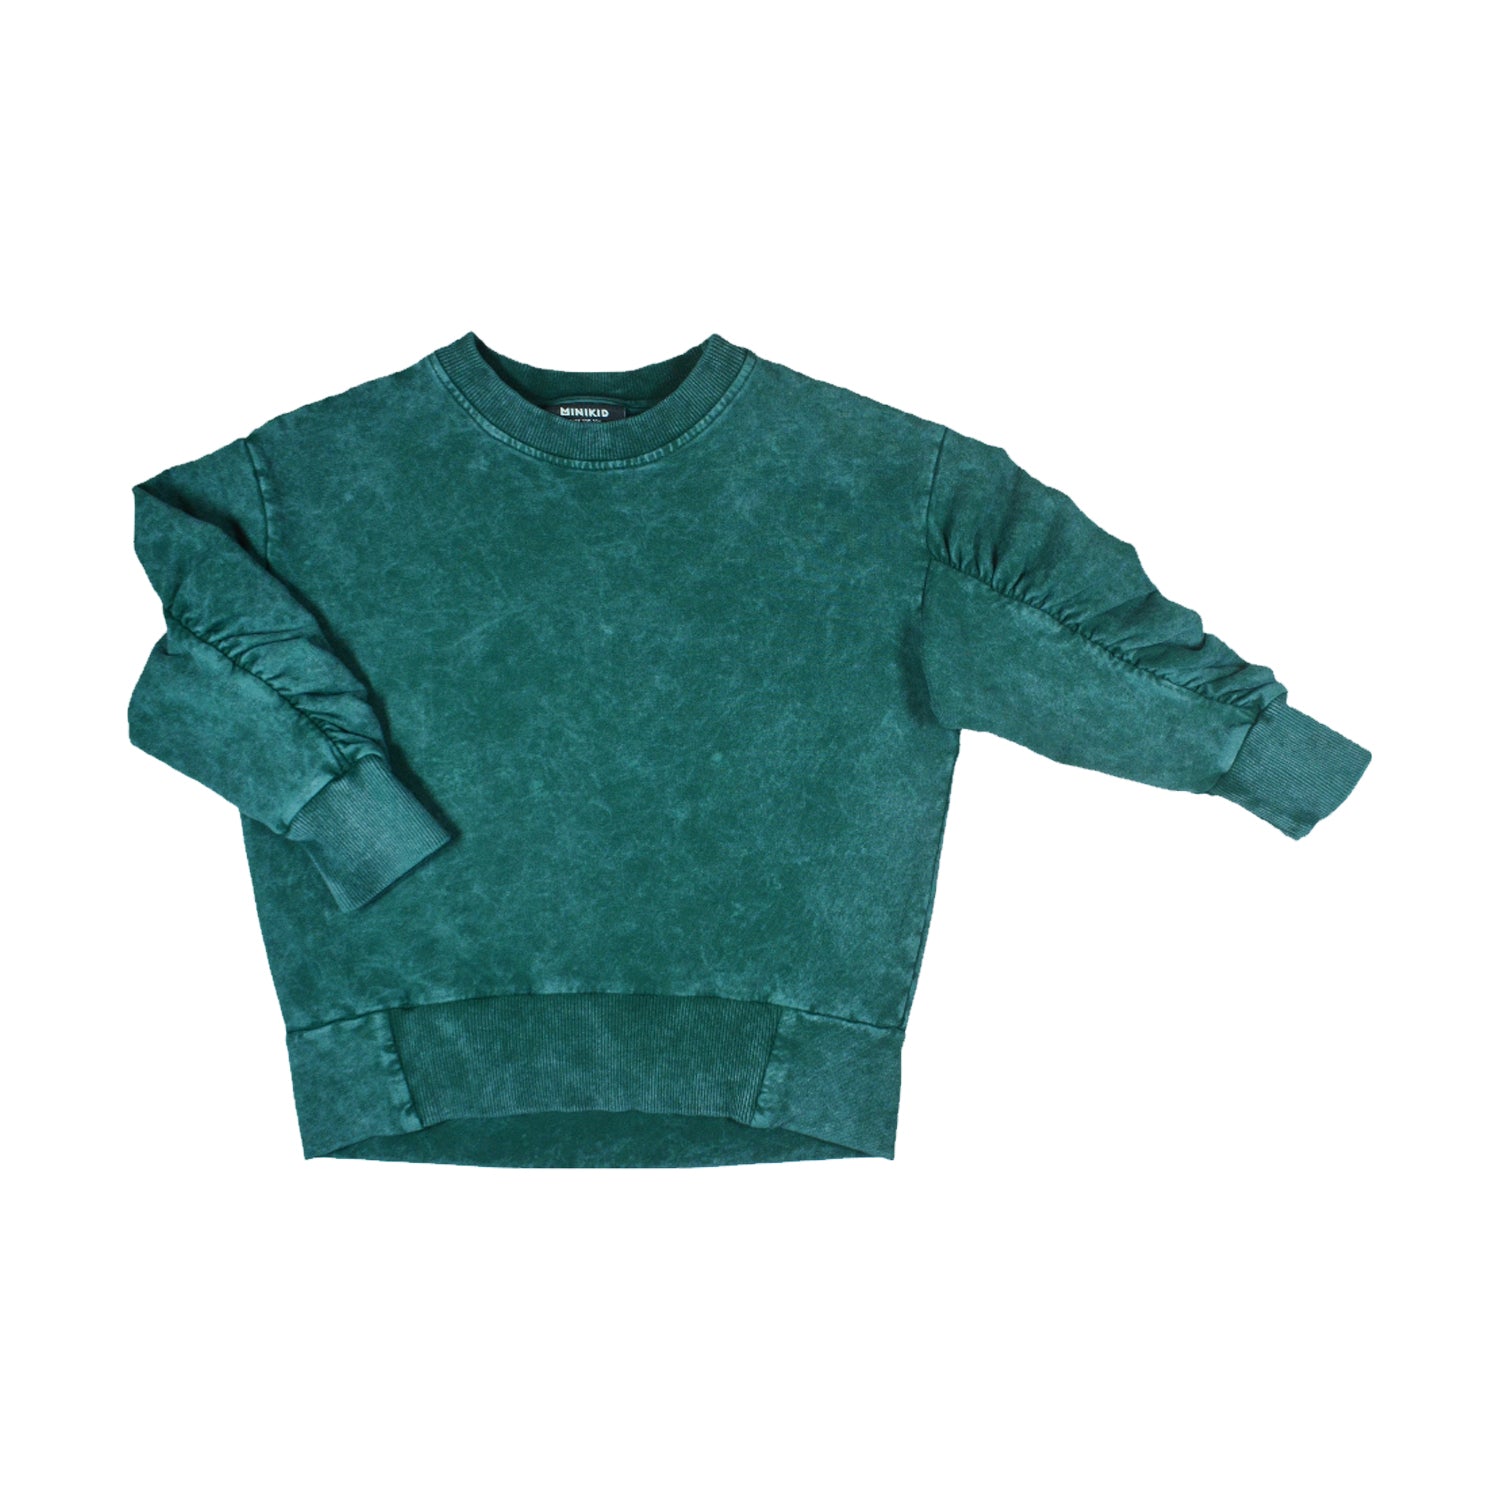 Minikid Puff Sweatshirt - Vintage Green